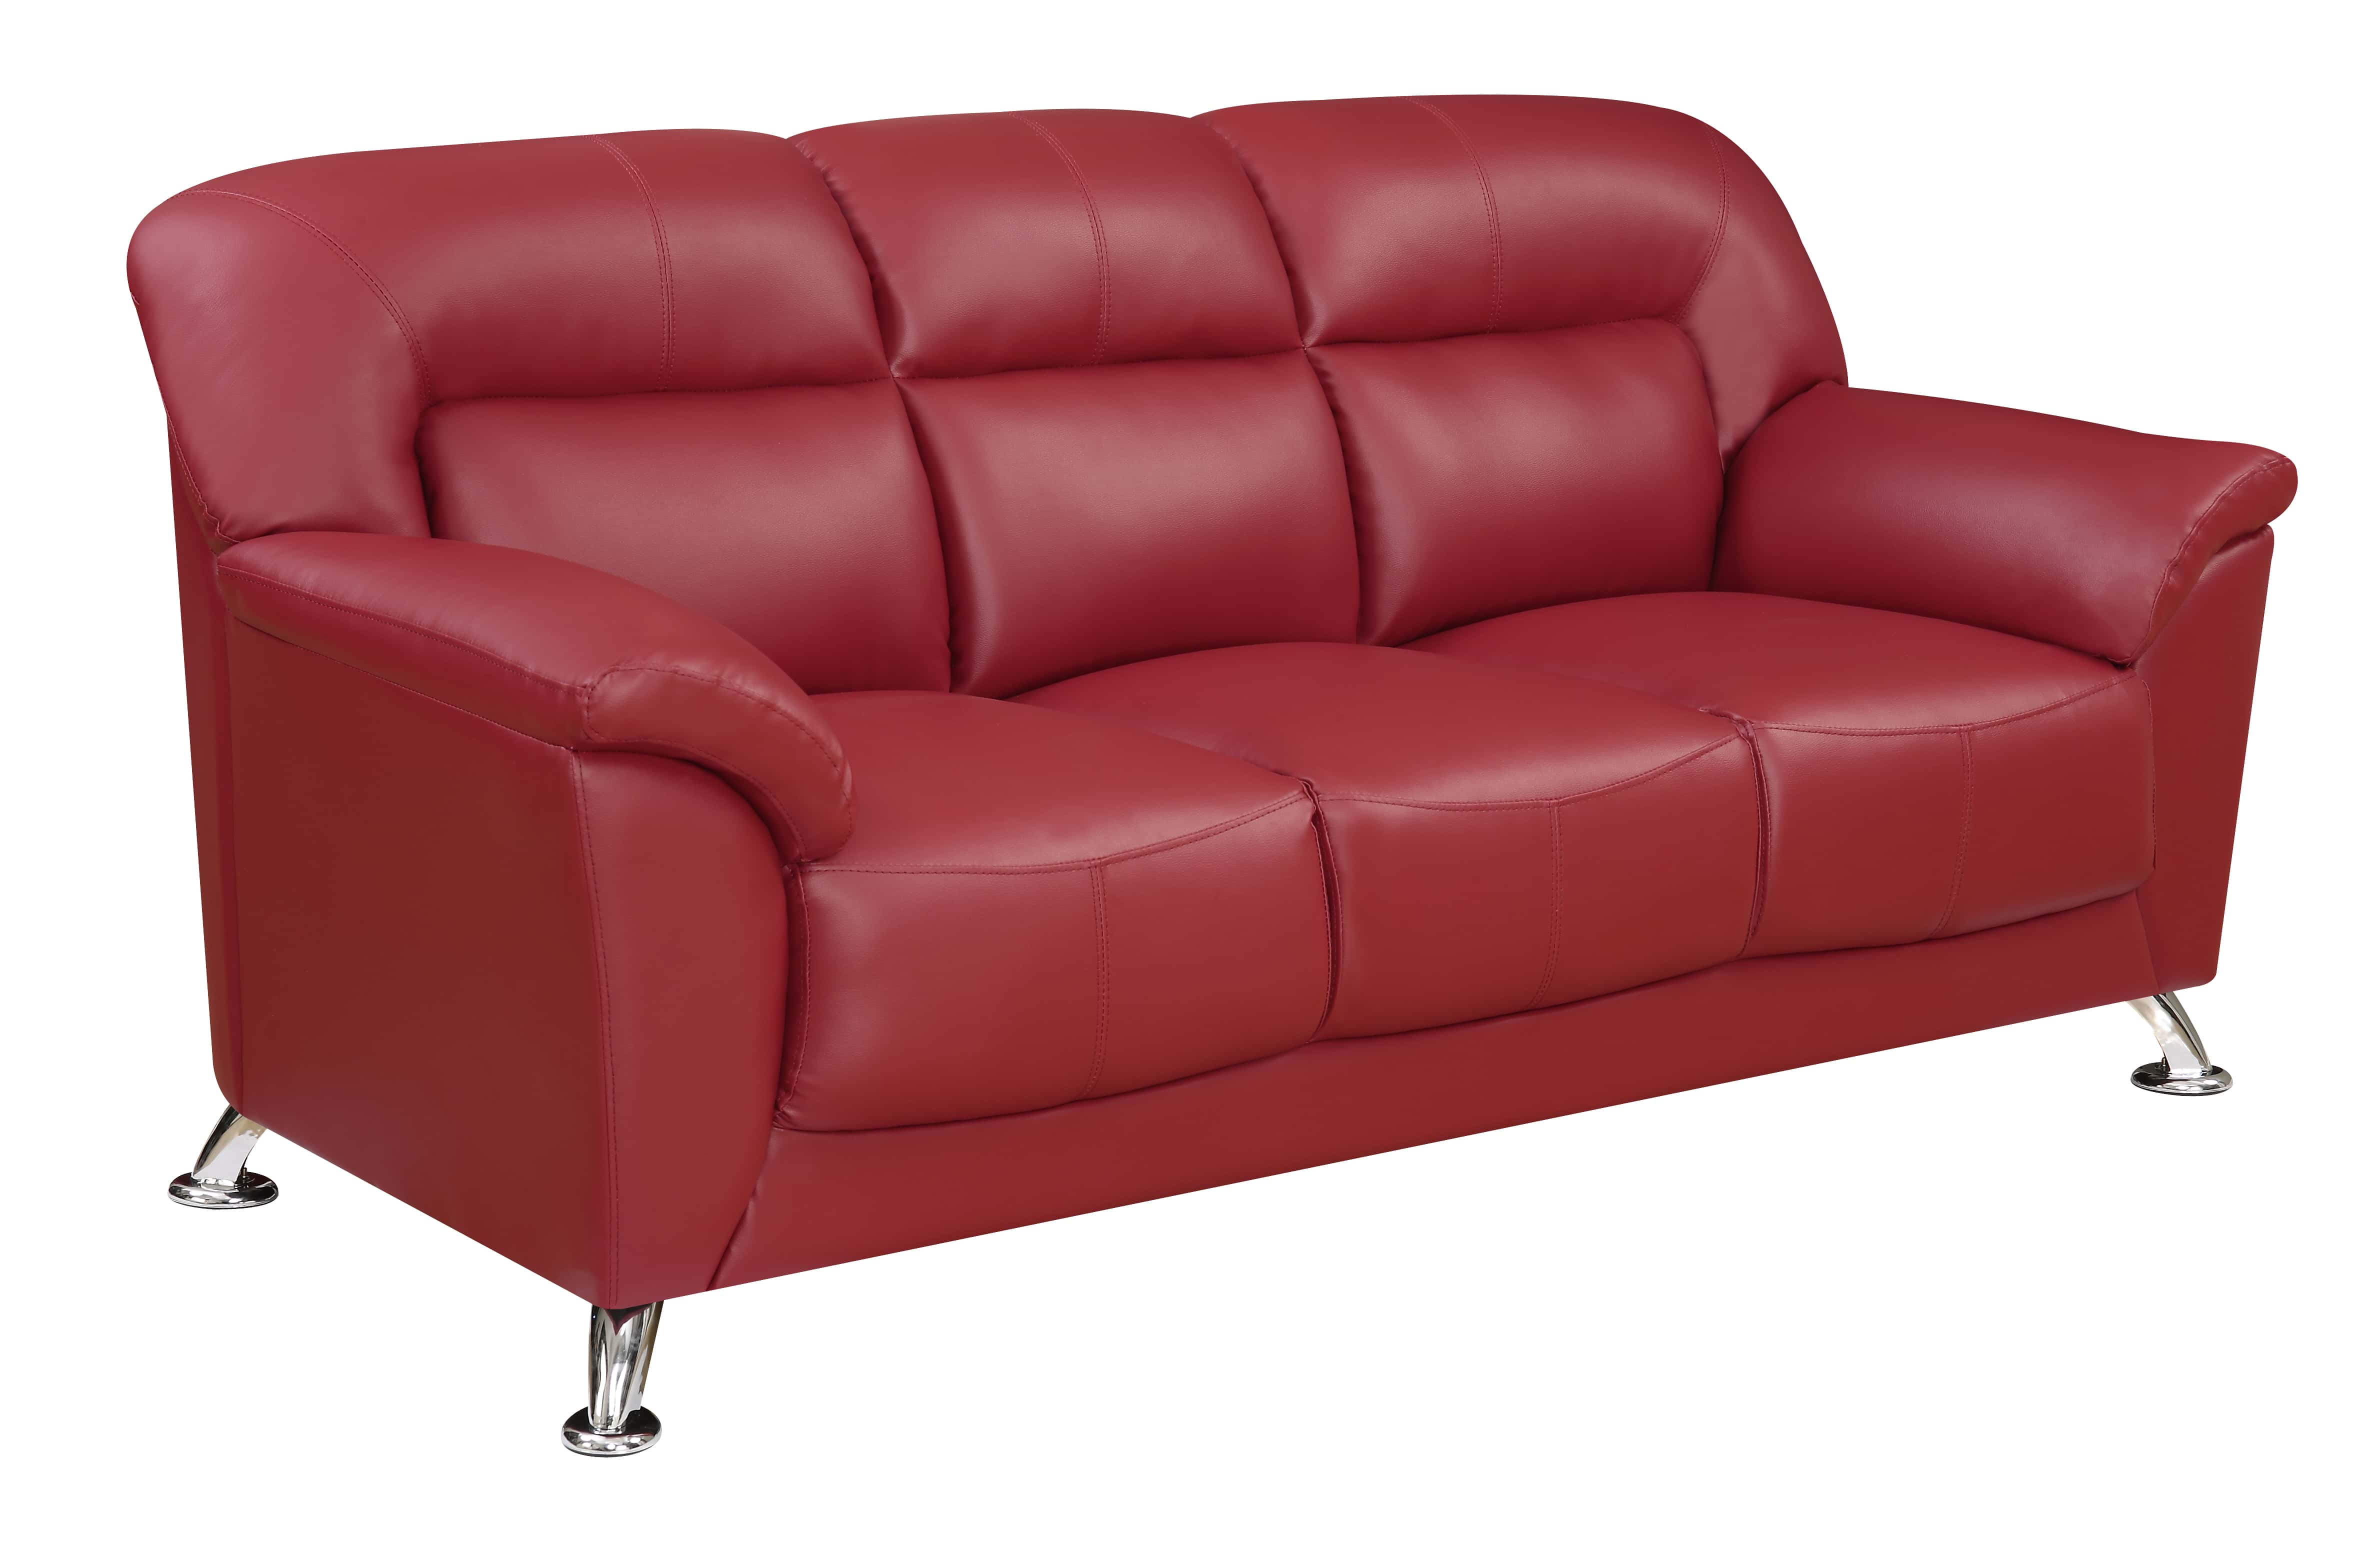 U9102 Red Vinyl Sofa by Global Furniture